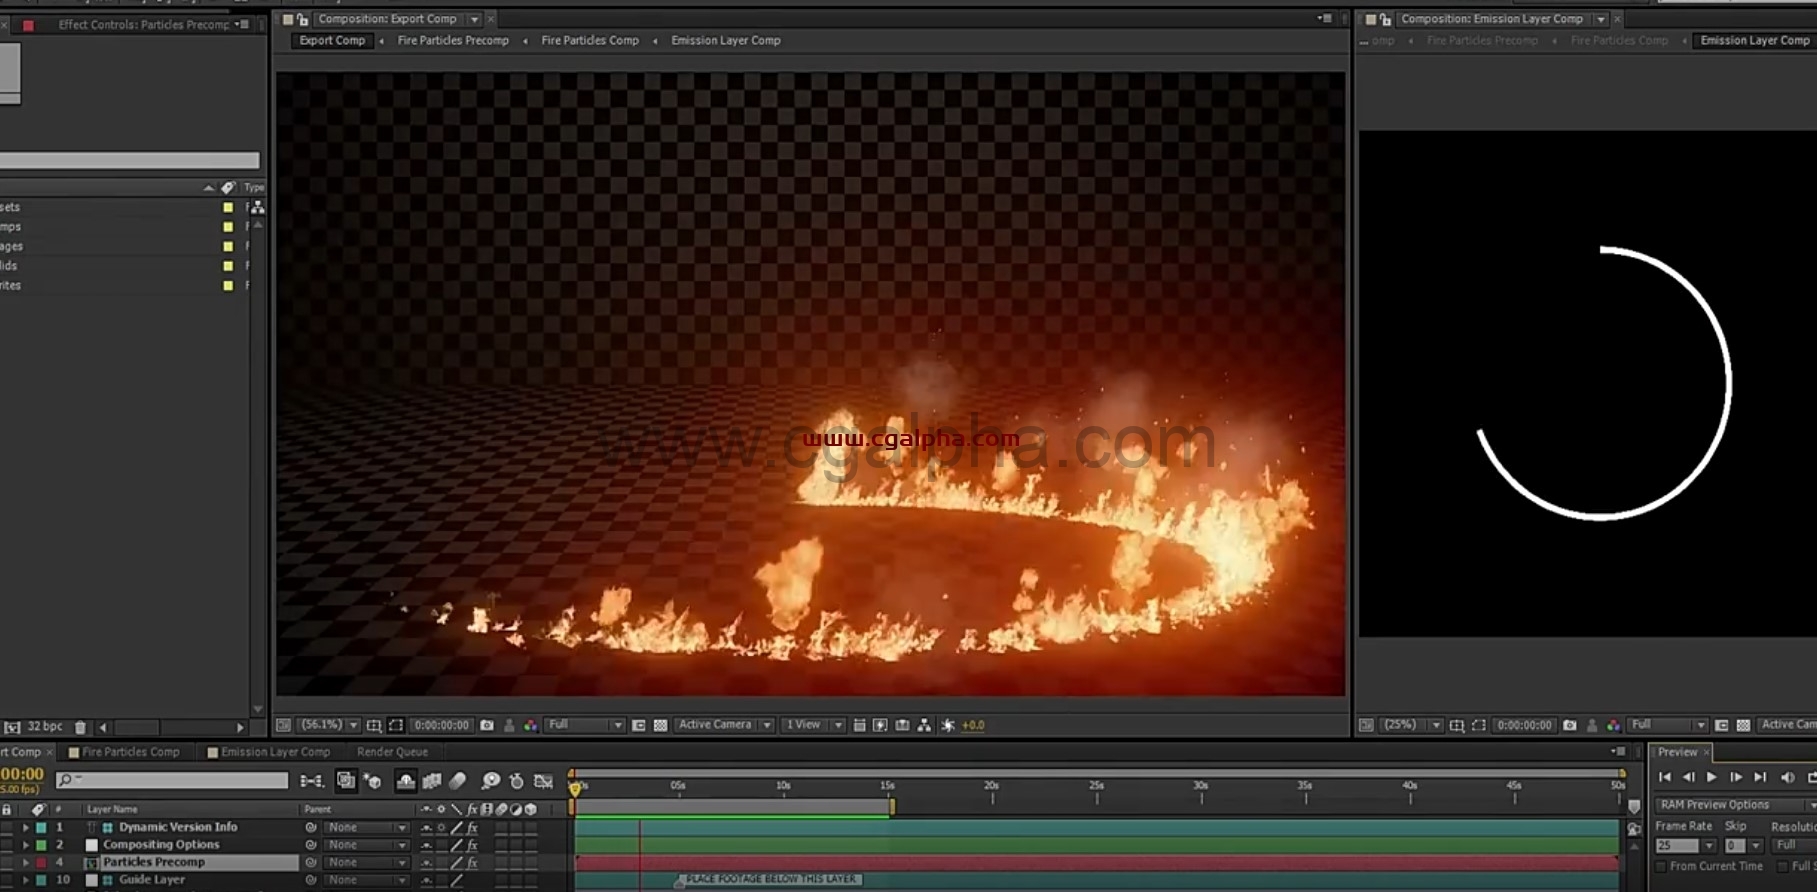 【AE模板】-Particular模拟15种火焰燃烧动画特效动画